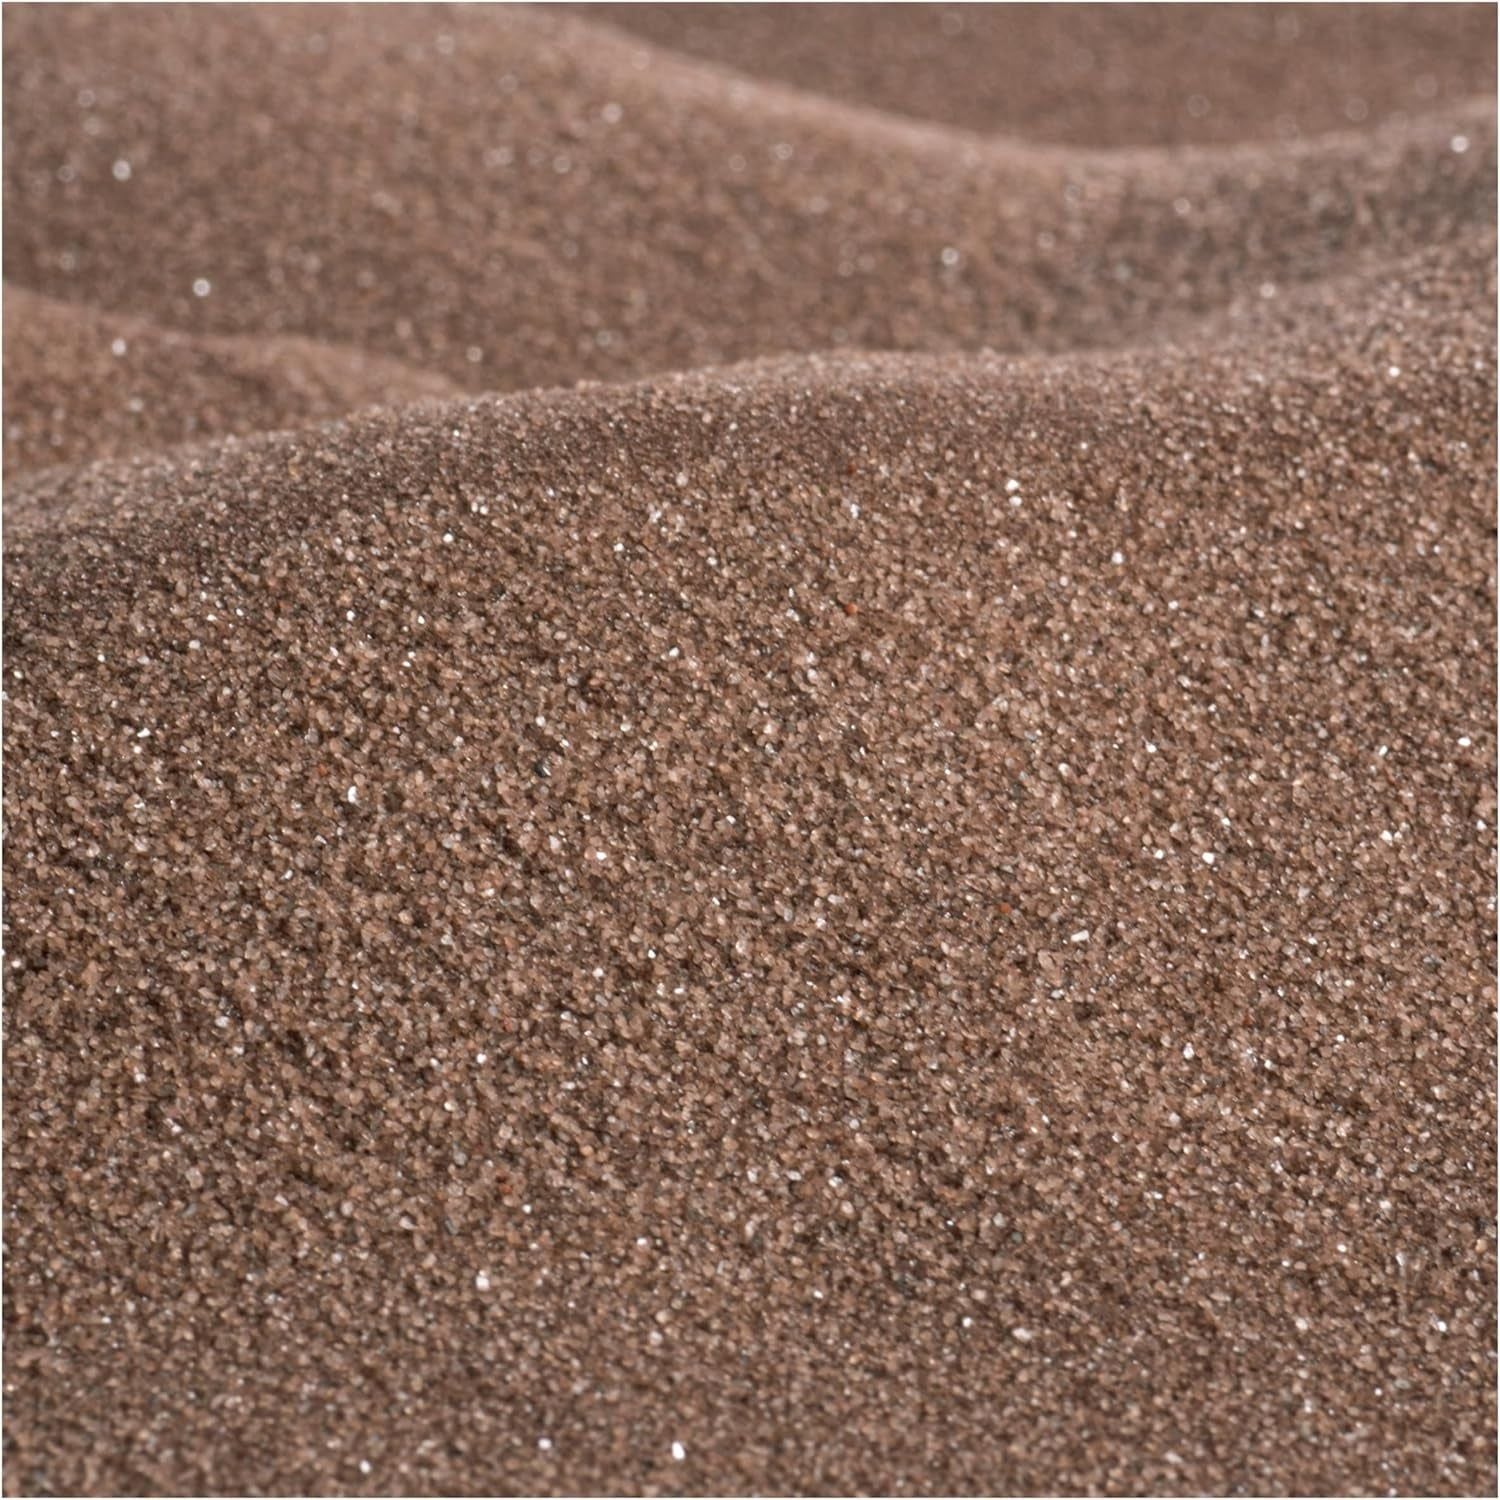 Classic Colored Sandtastik Sandtray Sand